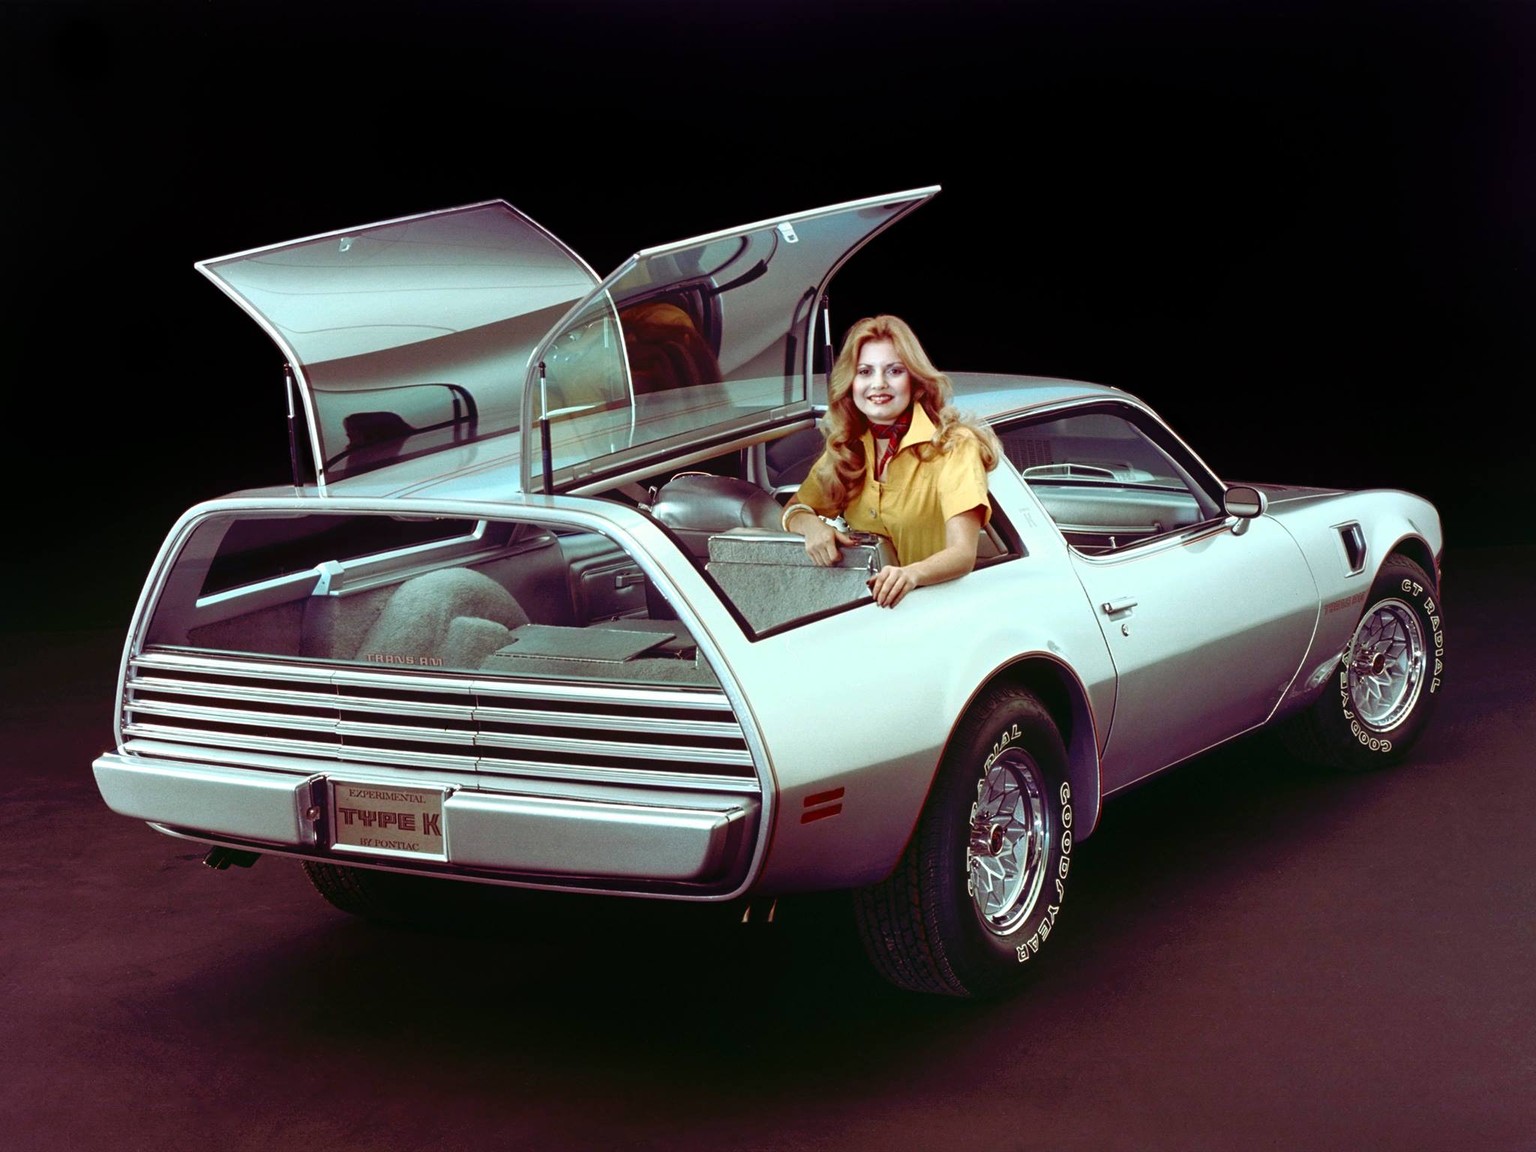 Pontiac Firebird Trans Am Type K Prototype 1977 shooting brake auto retro motor design https://www.flickr.com/photos/pontfire/42230866081